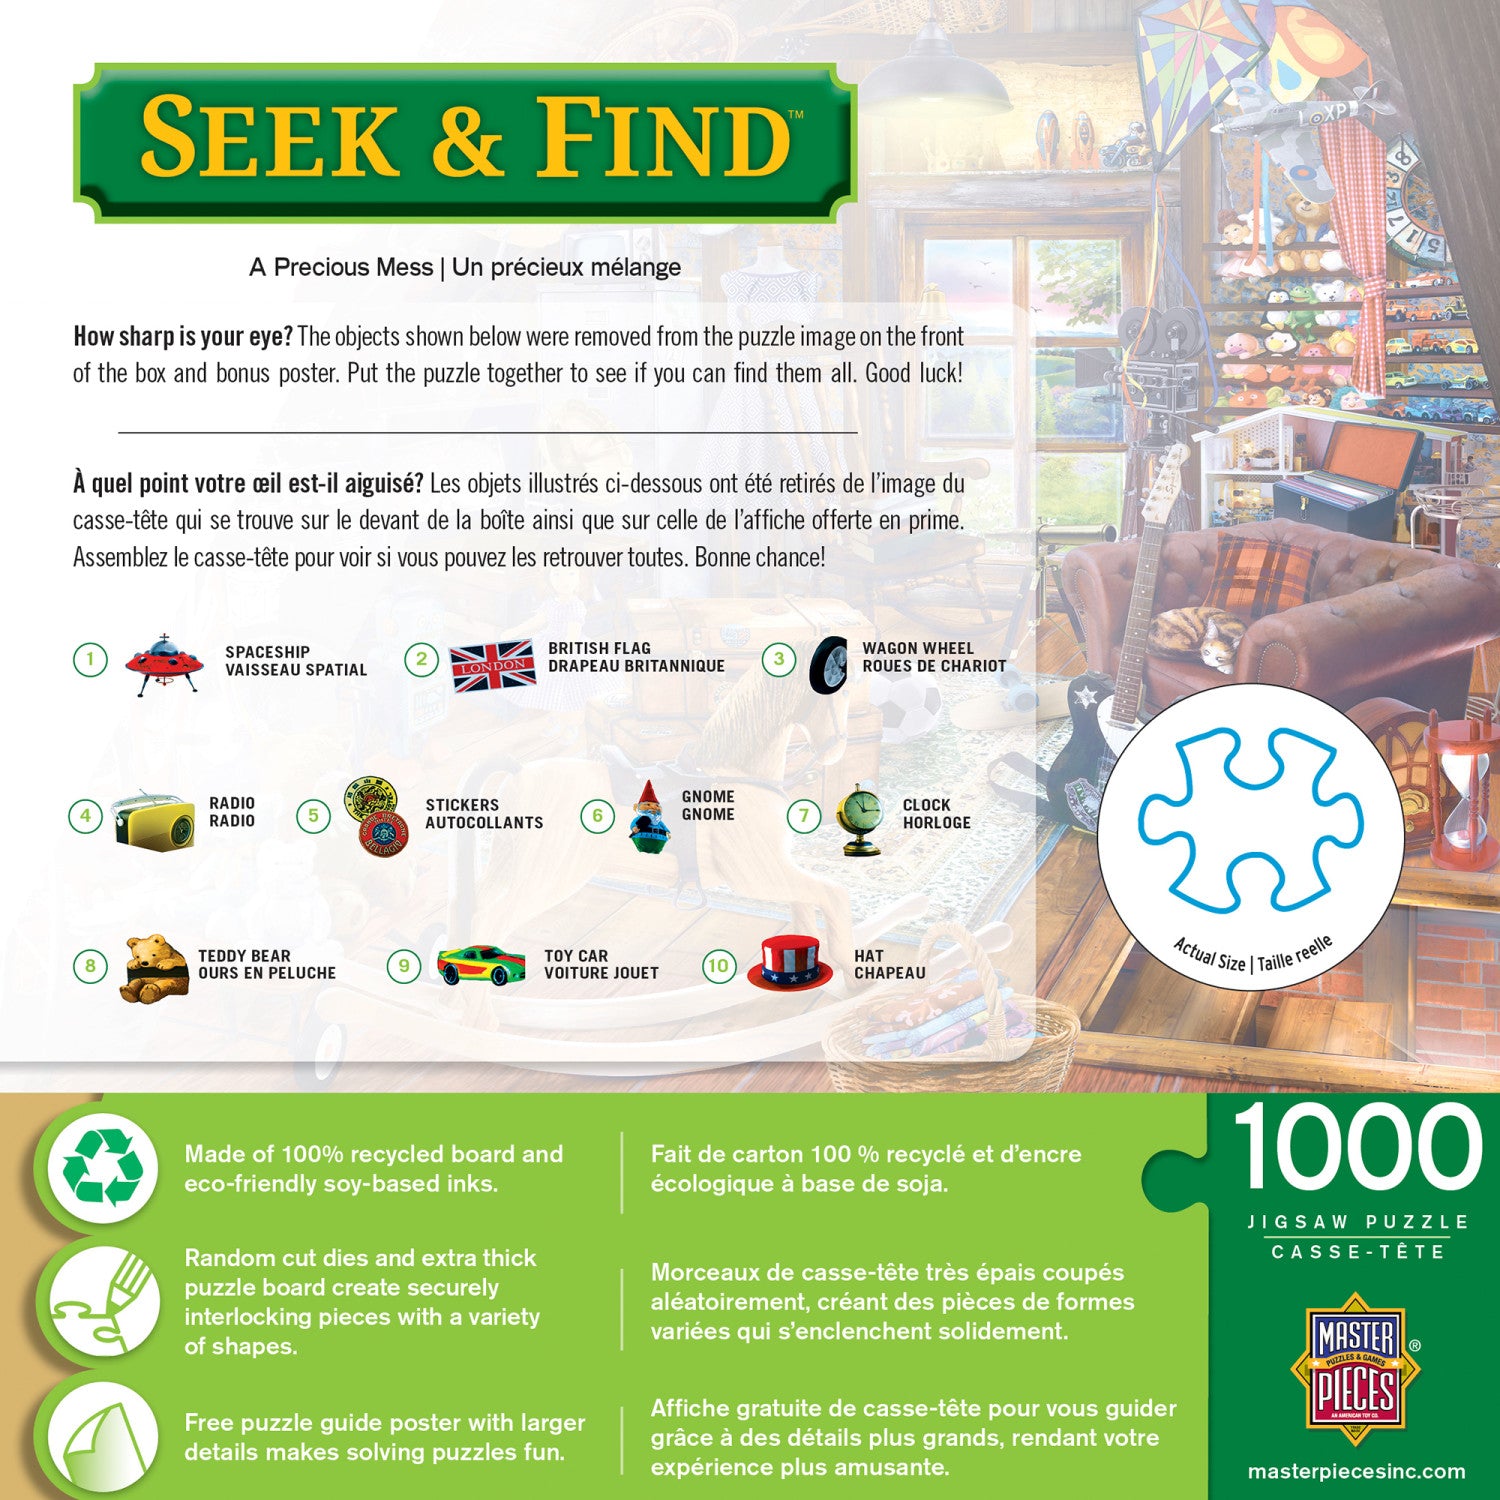 Seek & Find - A Precious Mess 1000 Piece Jigsaw Puzzle